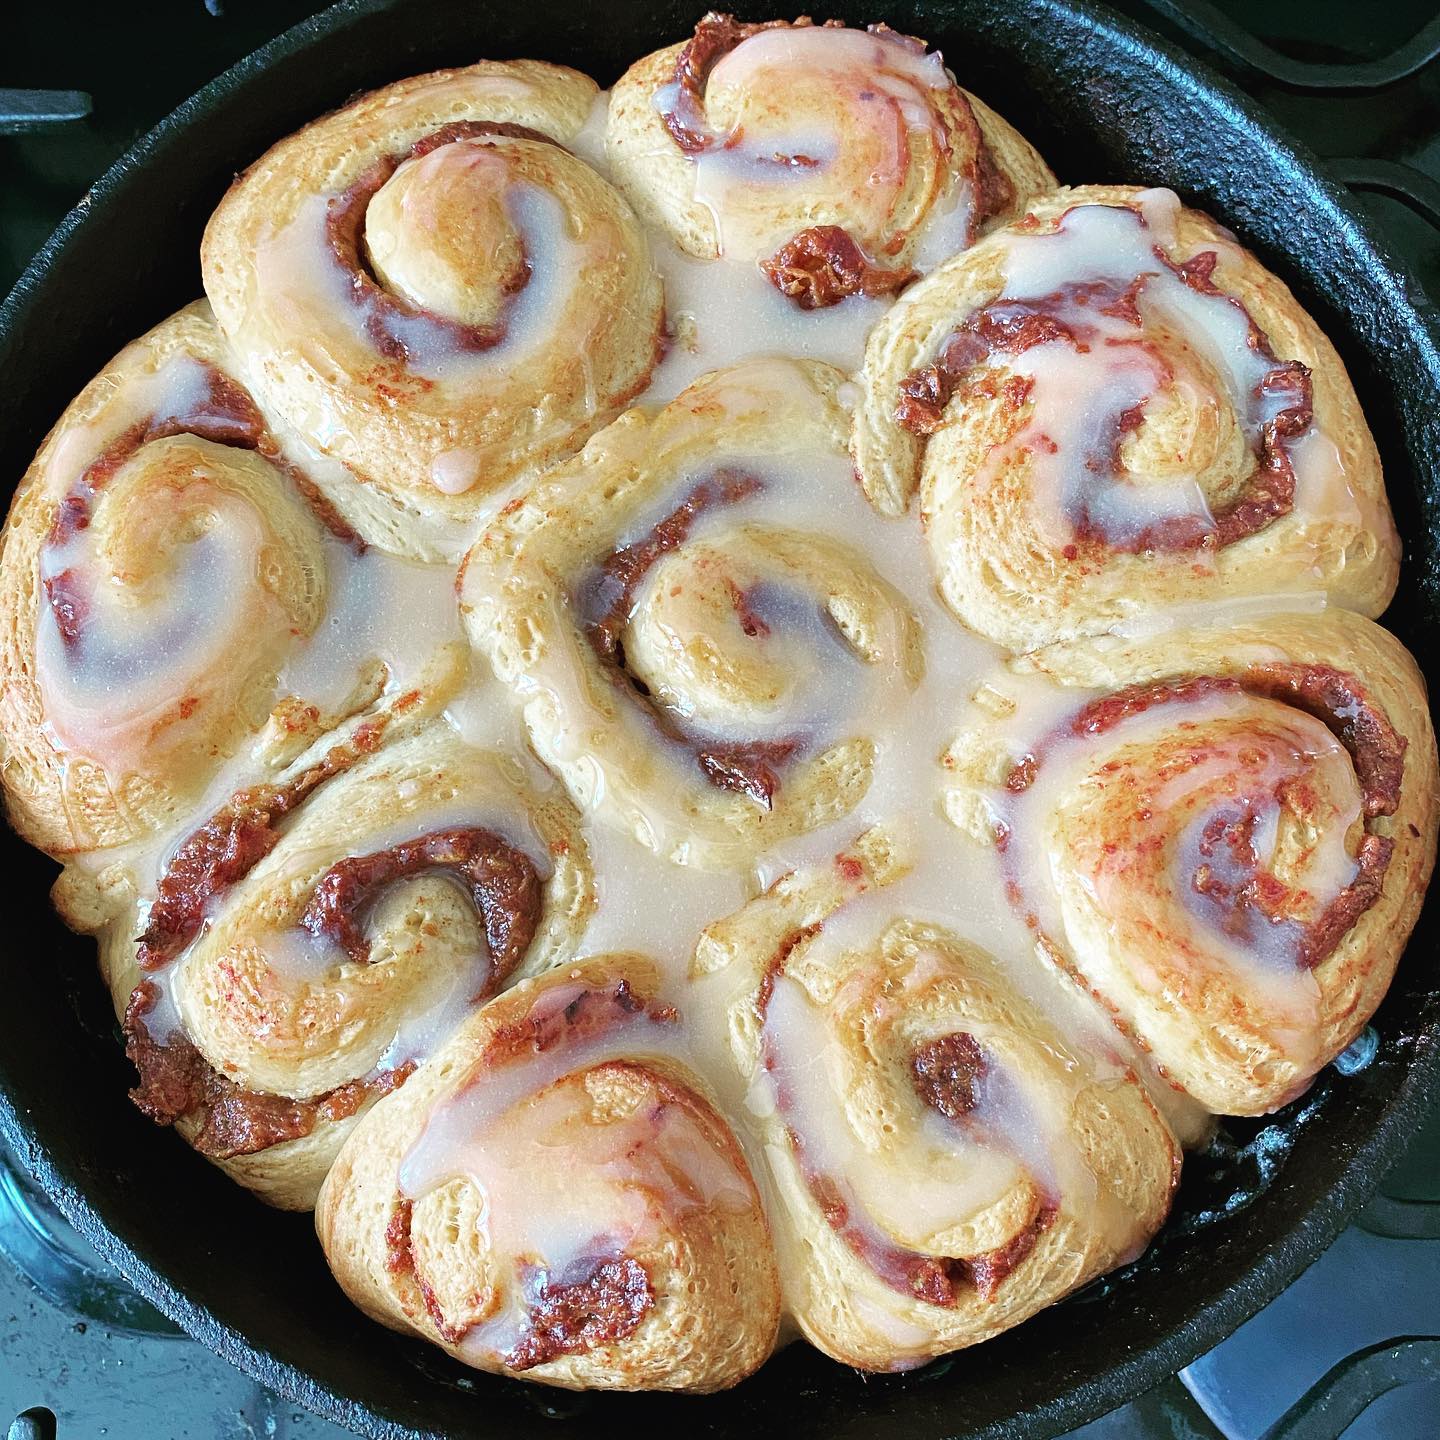 Cinnamon buns always help 🥧 @bonappetitmag #bakinghelps #comfortfood #warmsthesoul #cinnamonbuns